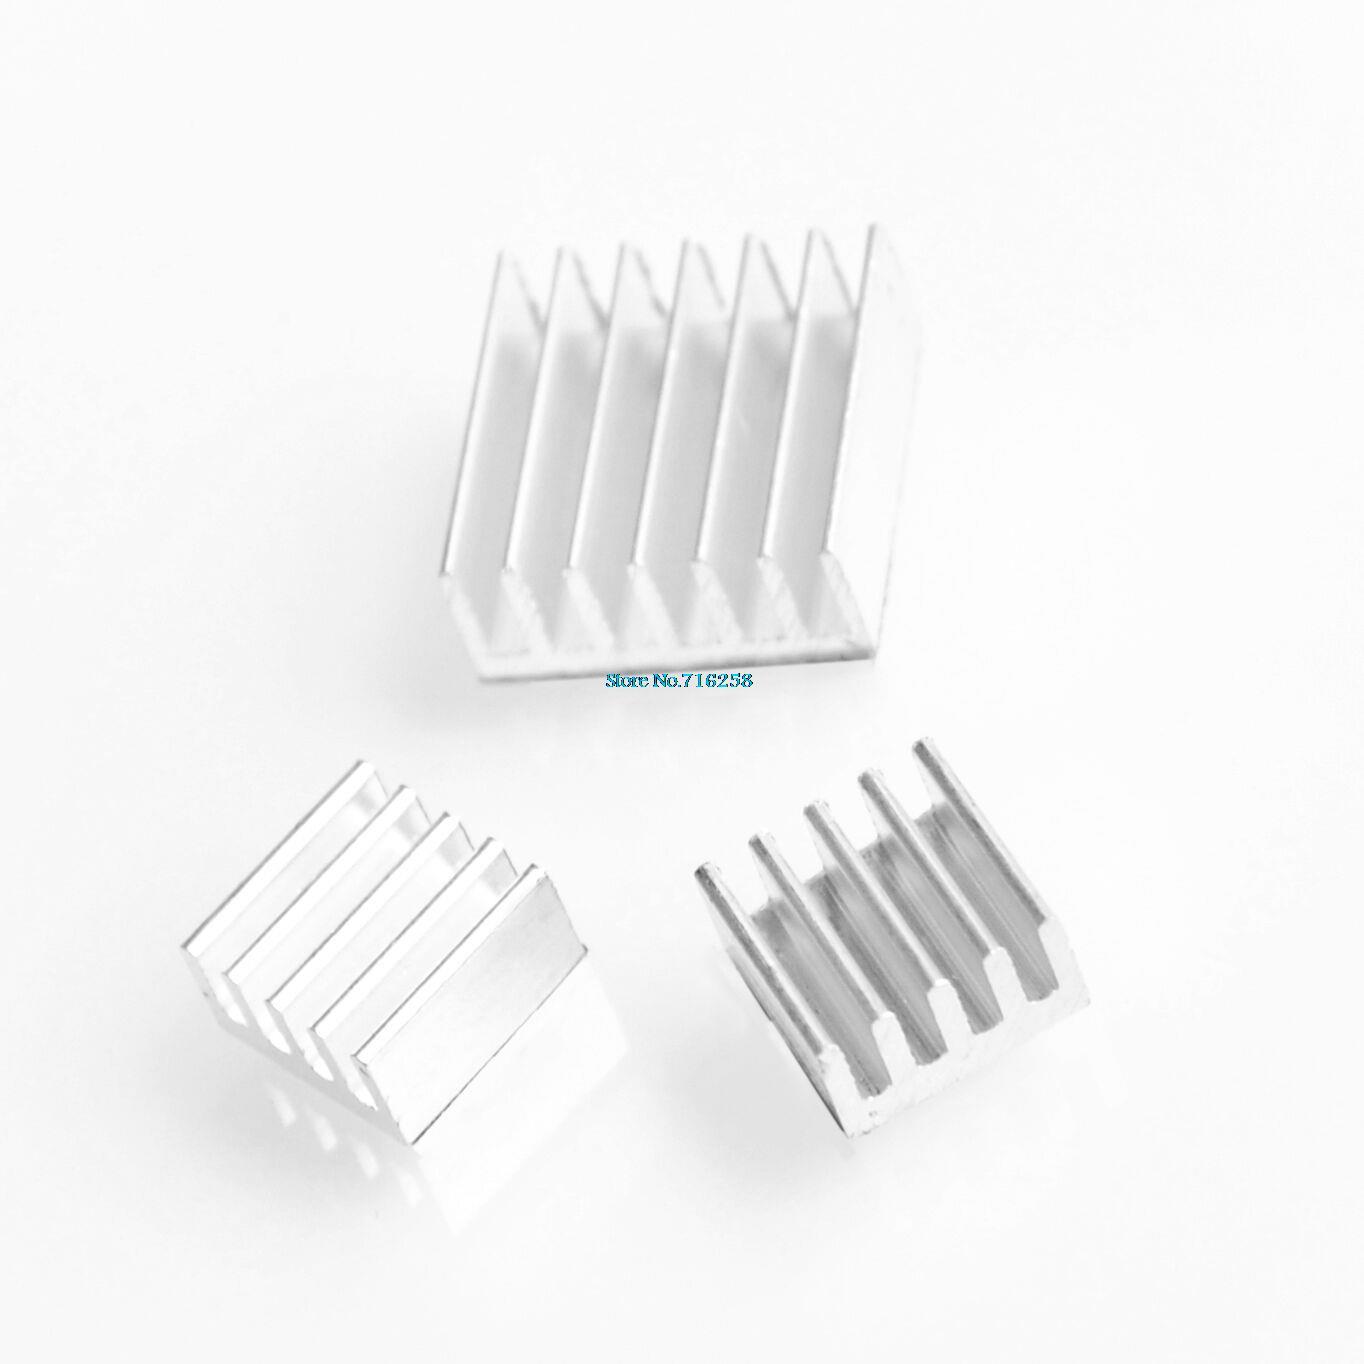 10set-30pcs-lot-Adhesive-Aluminum-Heatsink-Radiator-Cooler-Kit-For-Cooling-Raspberry-Pi-New-Heat-Sink-Fans